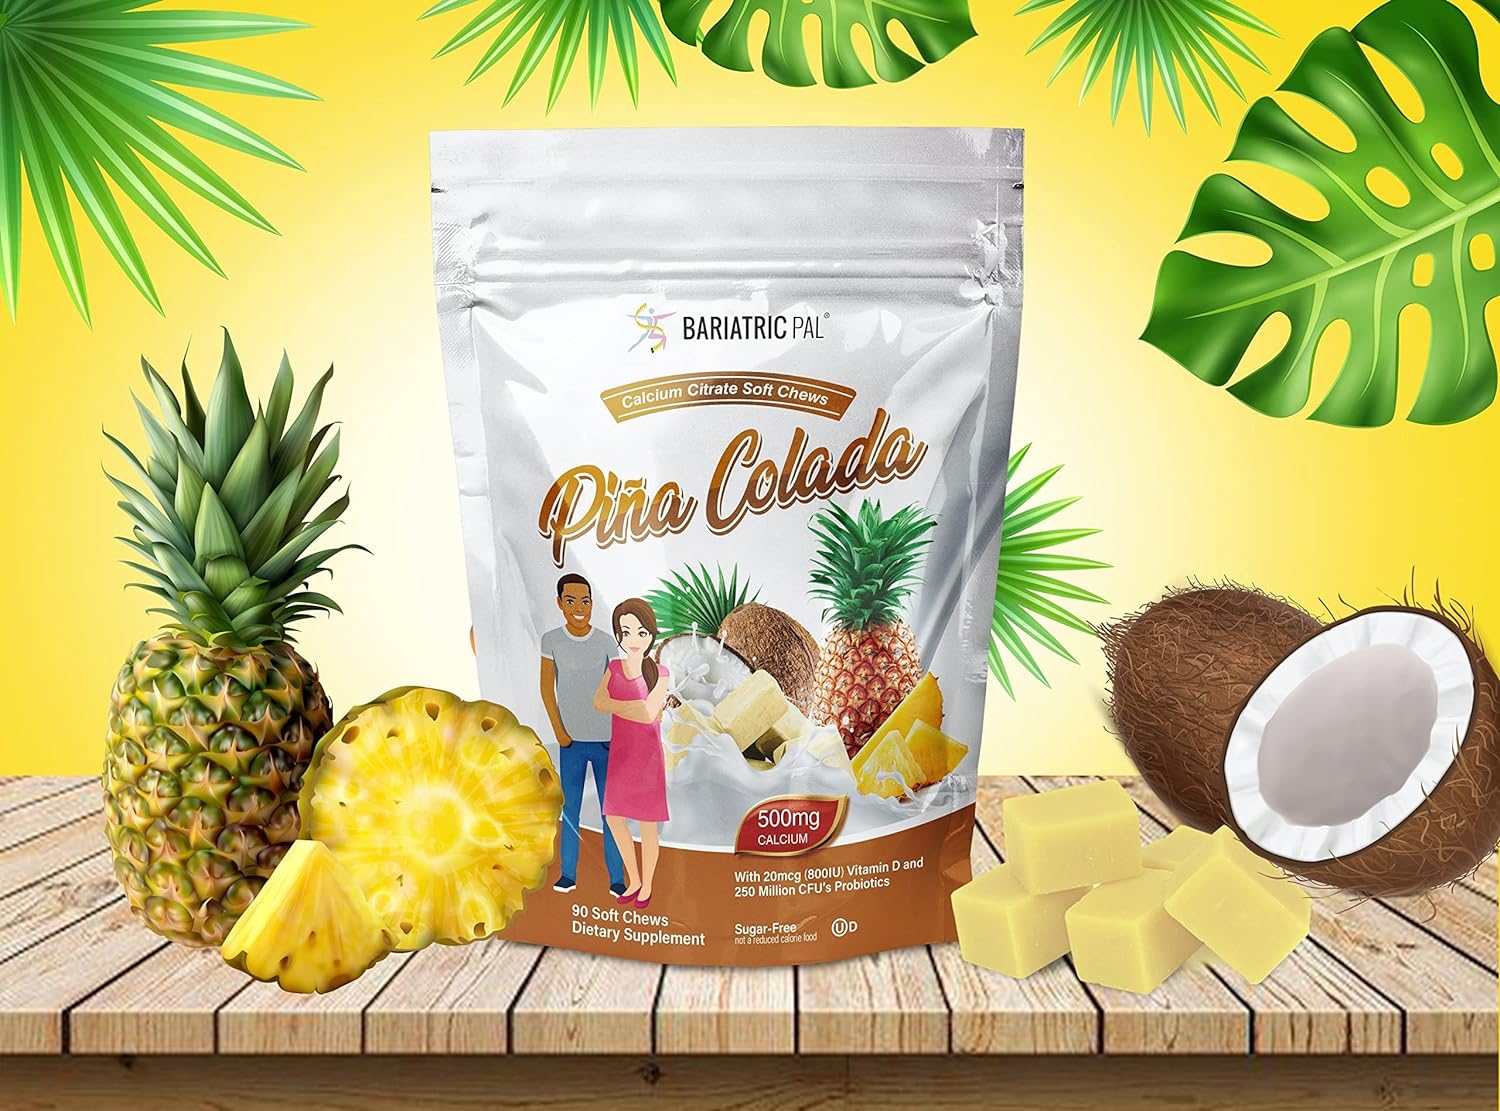 BariatricPal Sugar-Free Calcium Citrate Soft Chews 500mg with Probiotics (90 Count) - Piña Colada : Health & Household